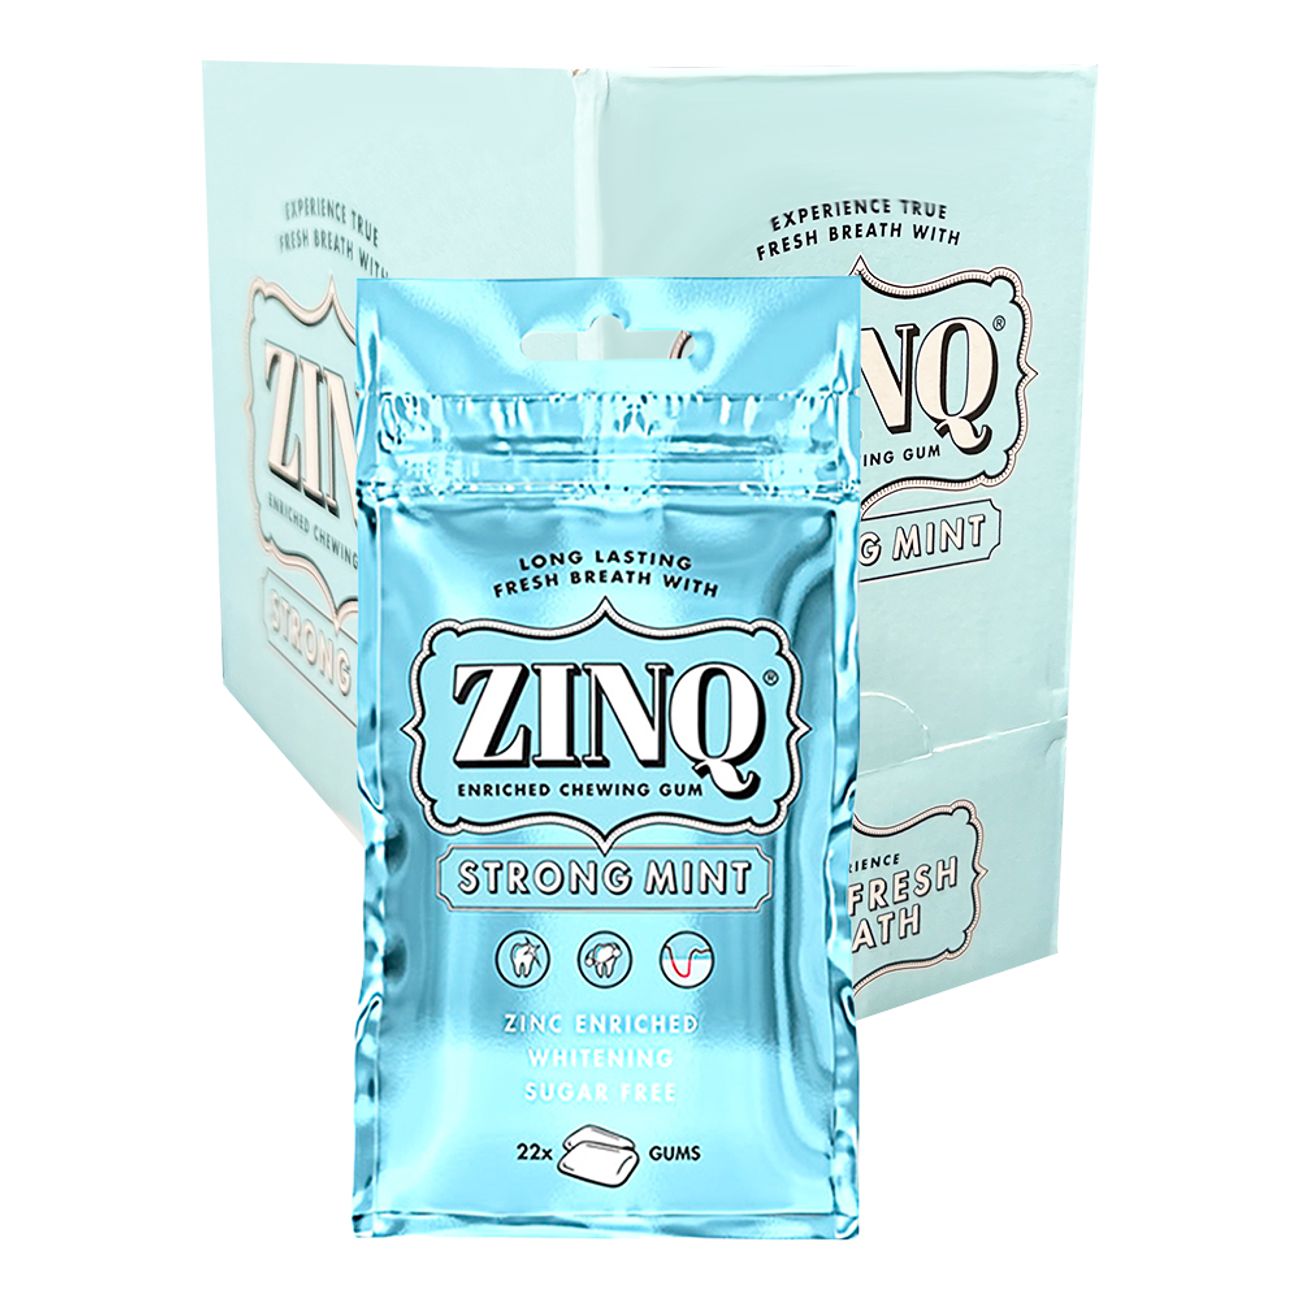 zinq-strong-mint-tuggummi-storpack-74129-2